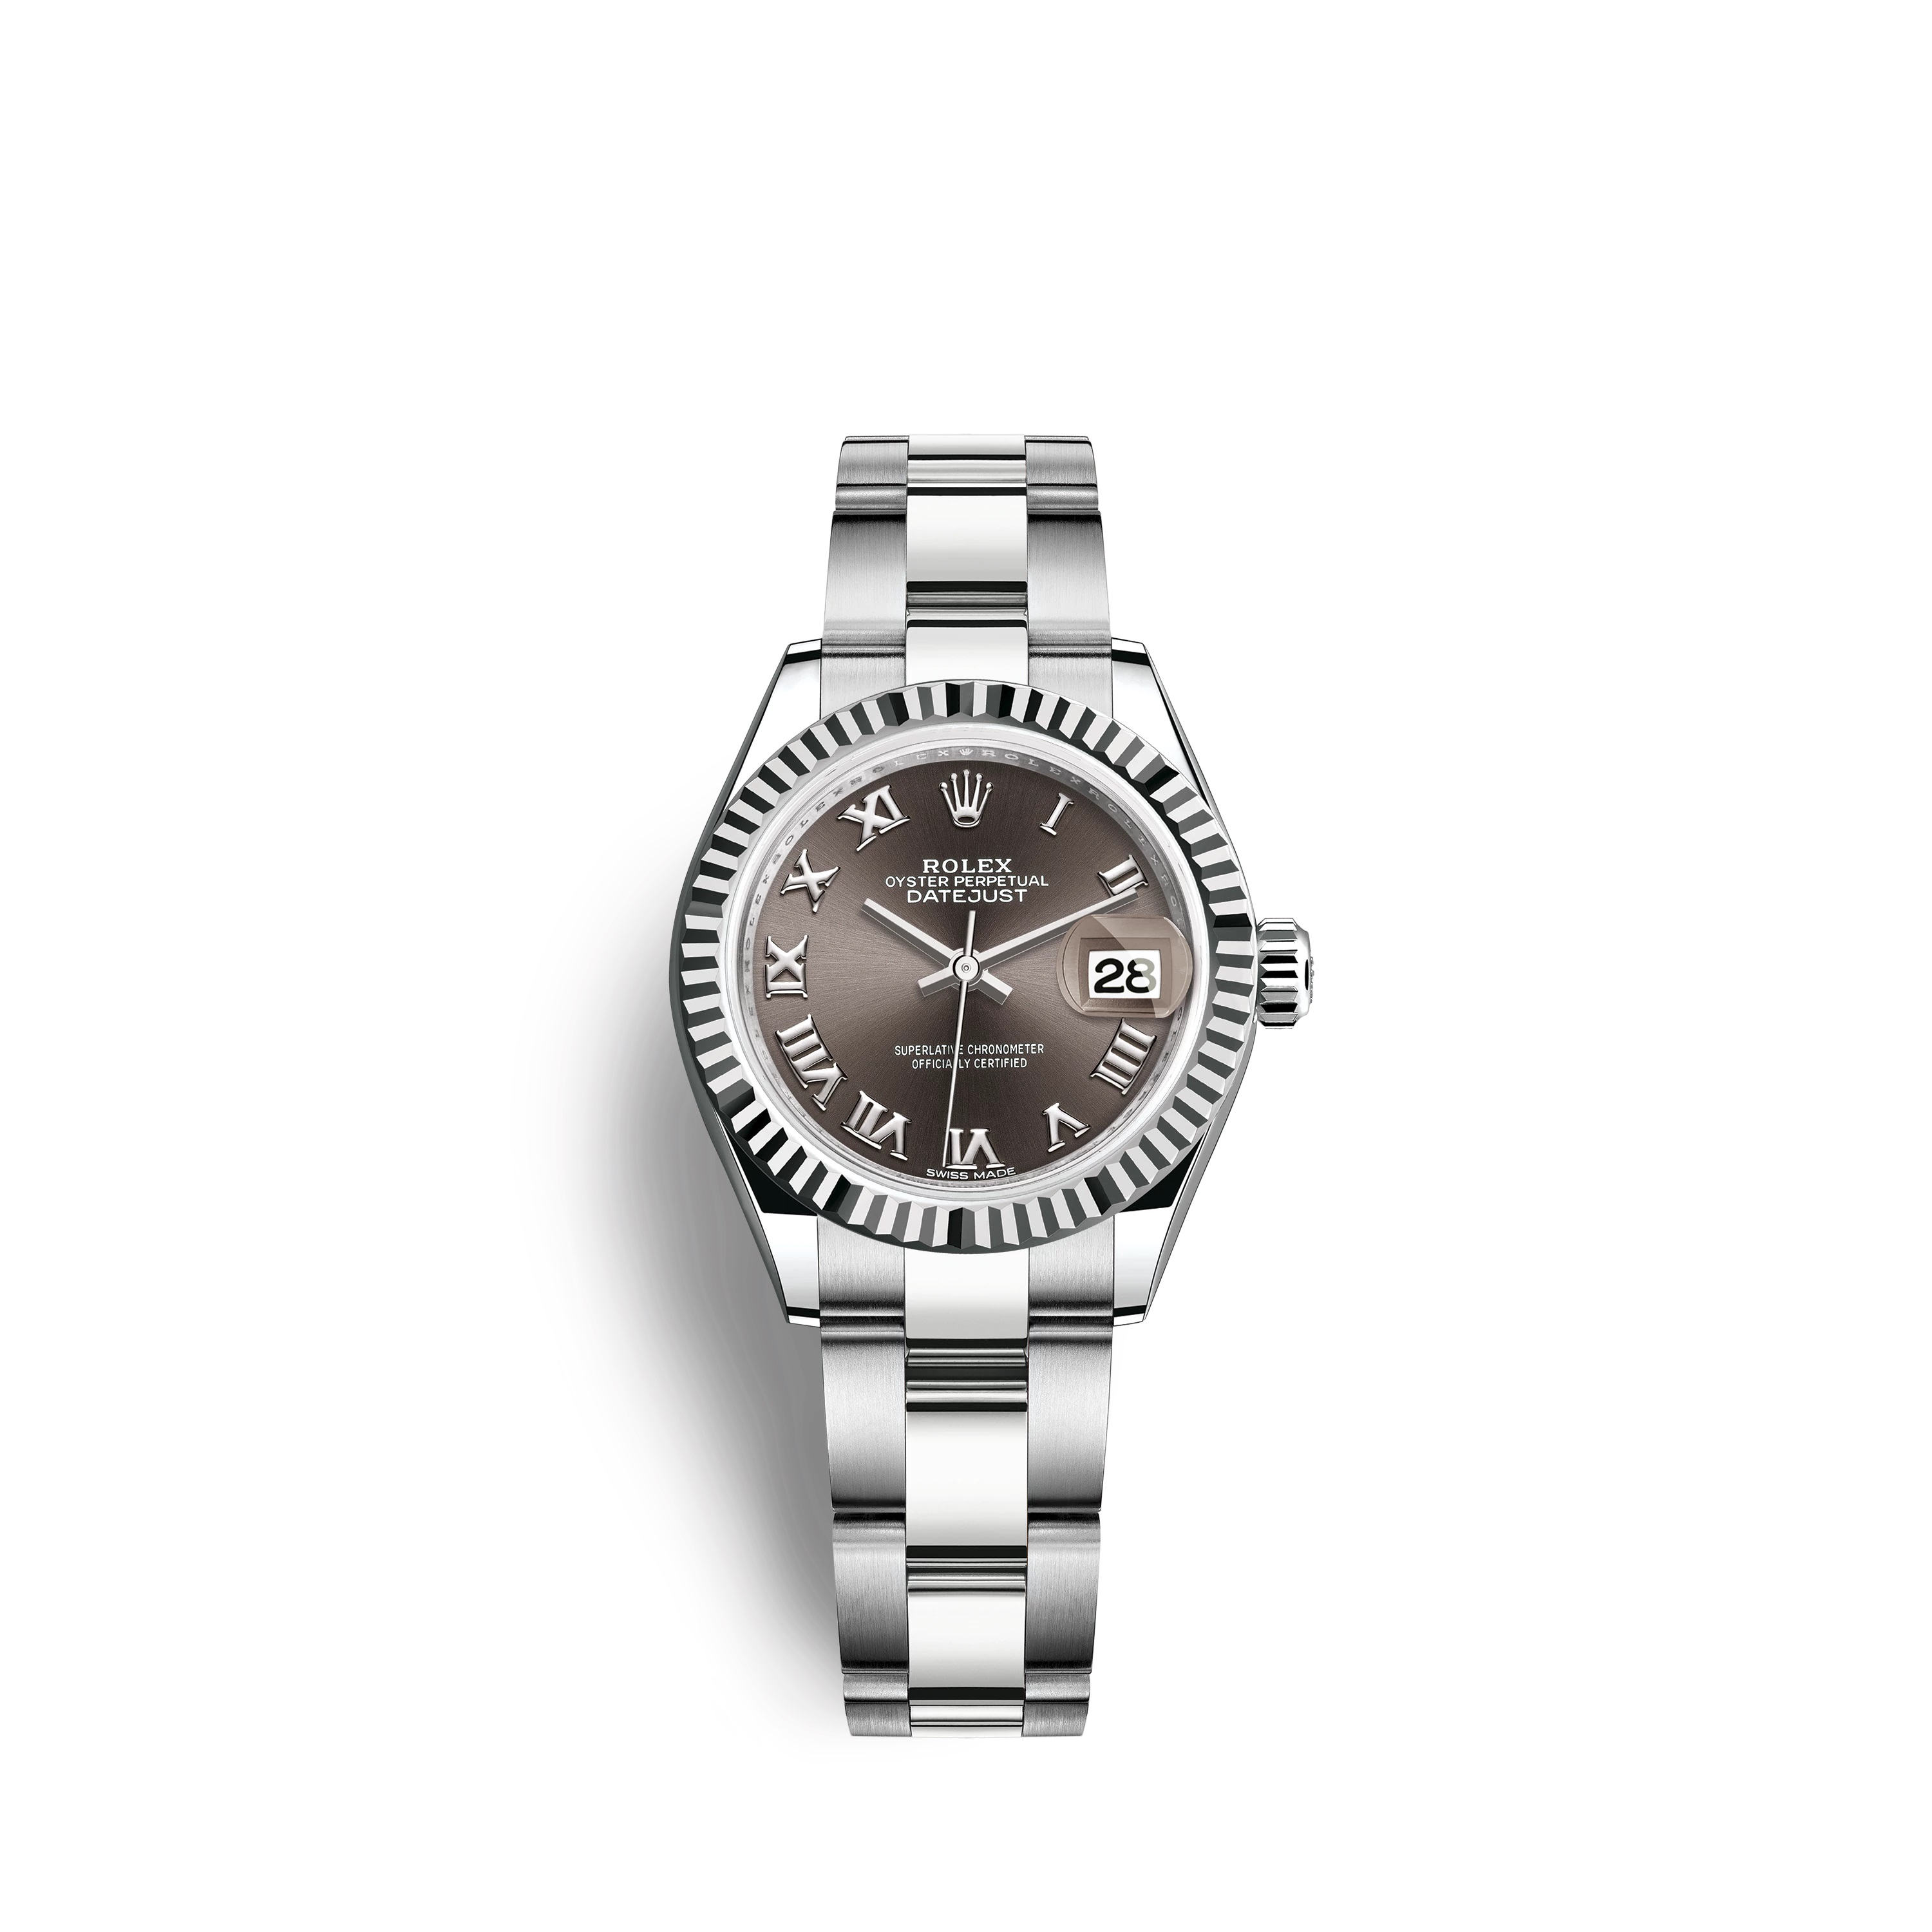 Lady-Datejust 28 279174 White Gold & Stainless Steel Watch (Dark grey)